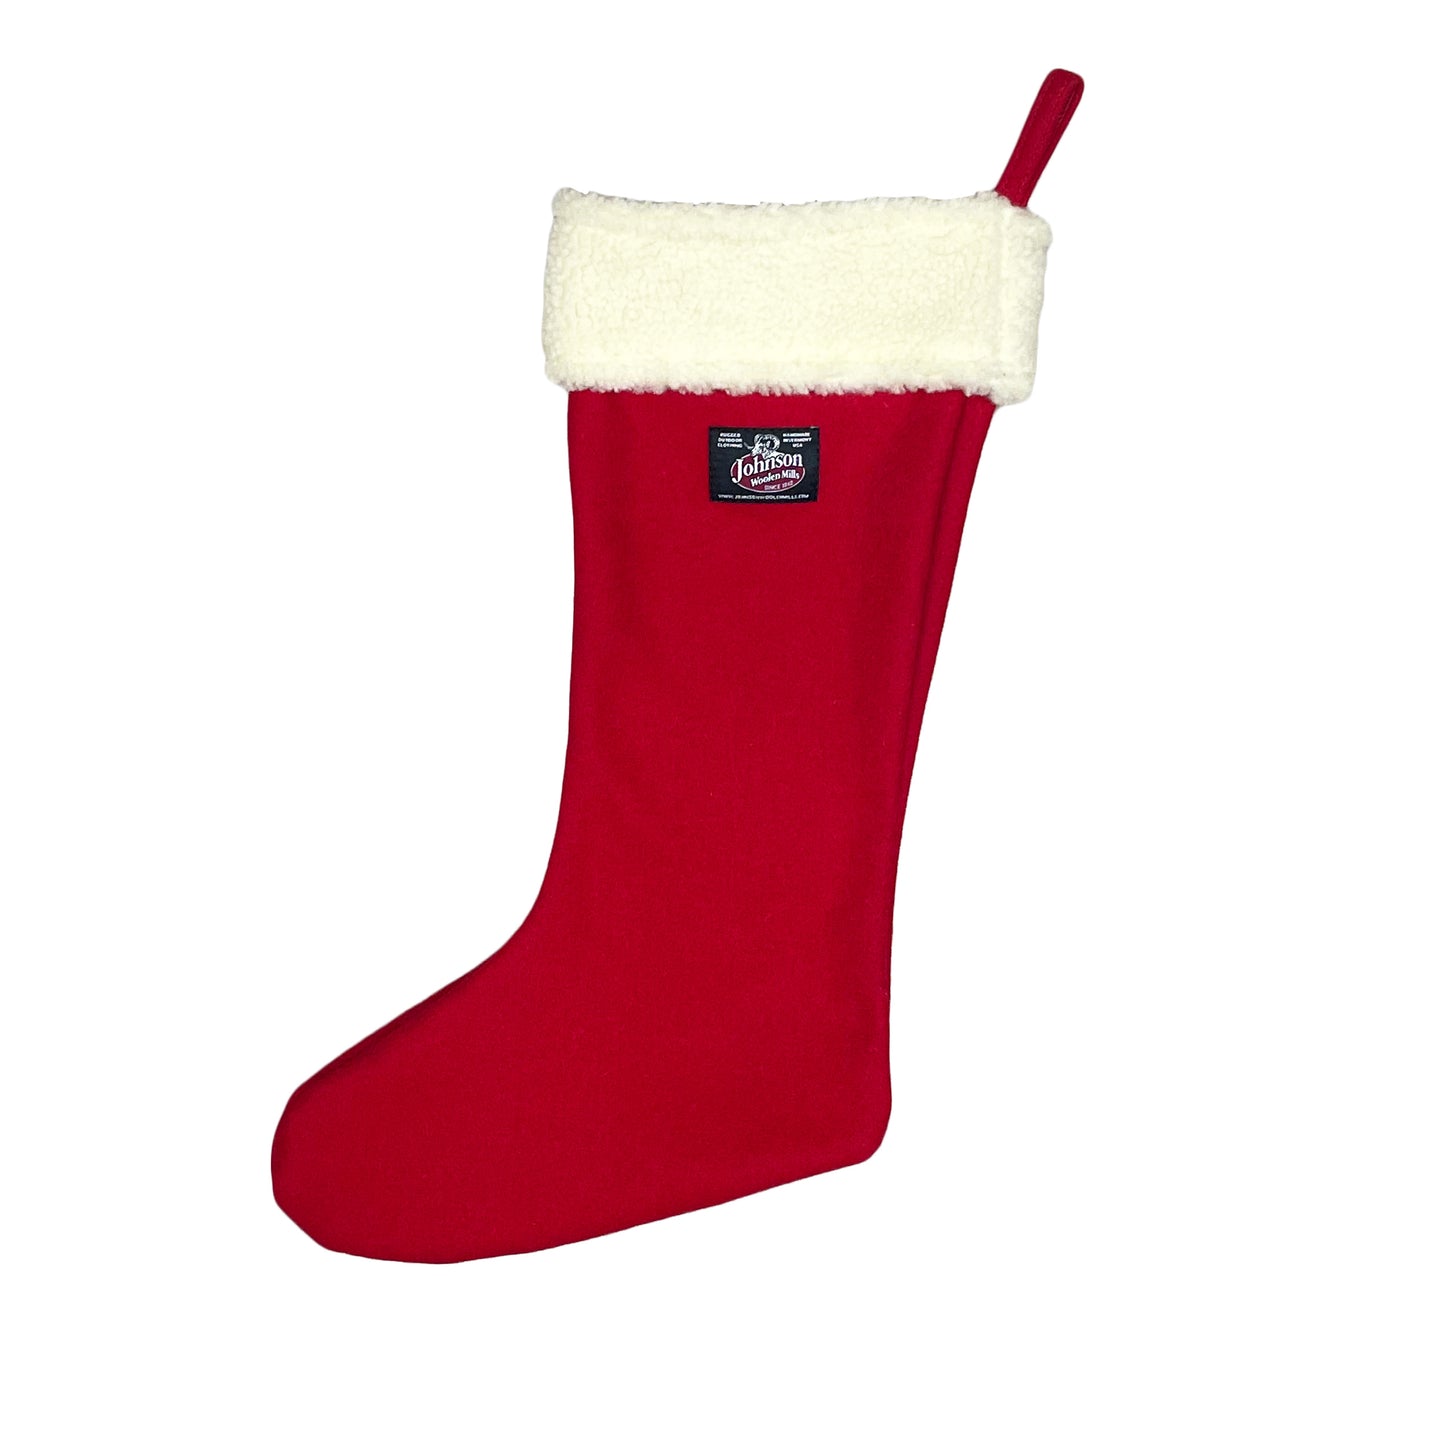 Johnson Woolen Mills red wool Christmas stocking